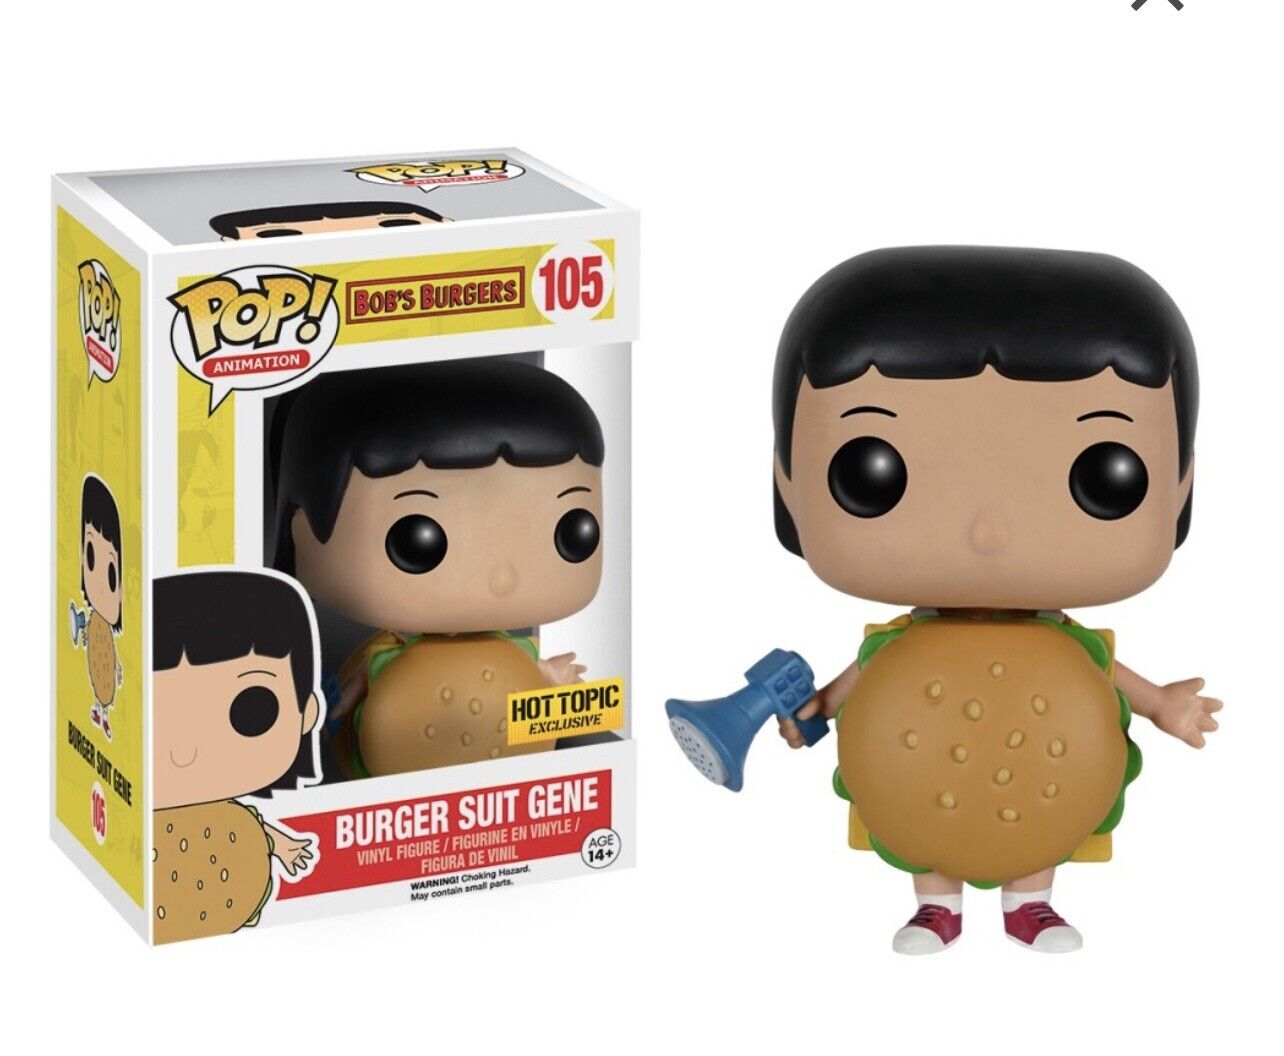 Bob's Burgers - Burger Suit Gene [Underground Toys Exclusive] #105